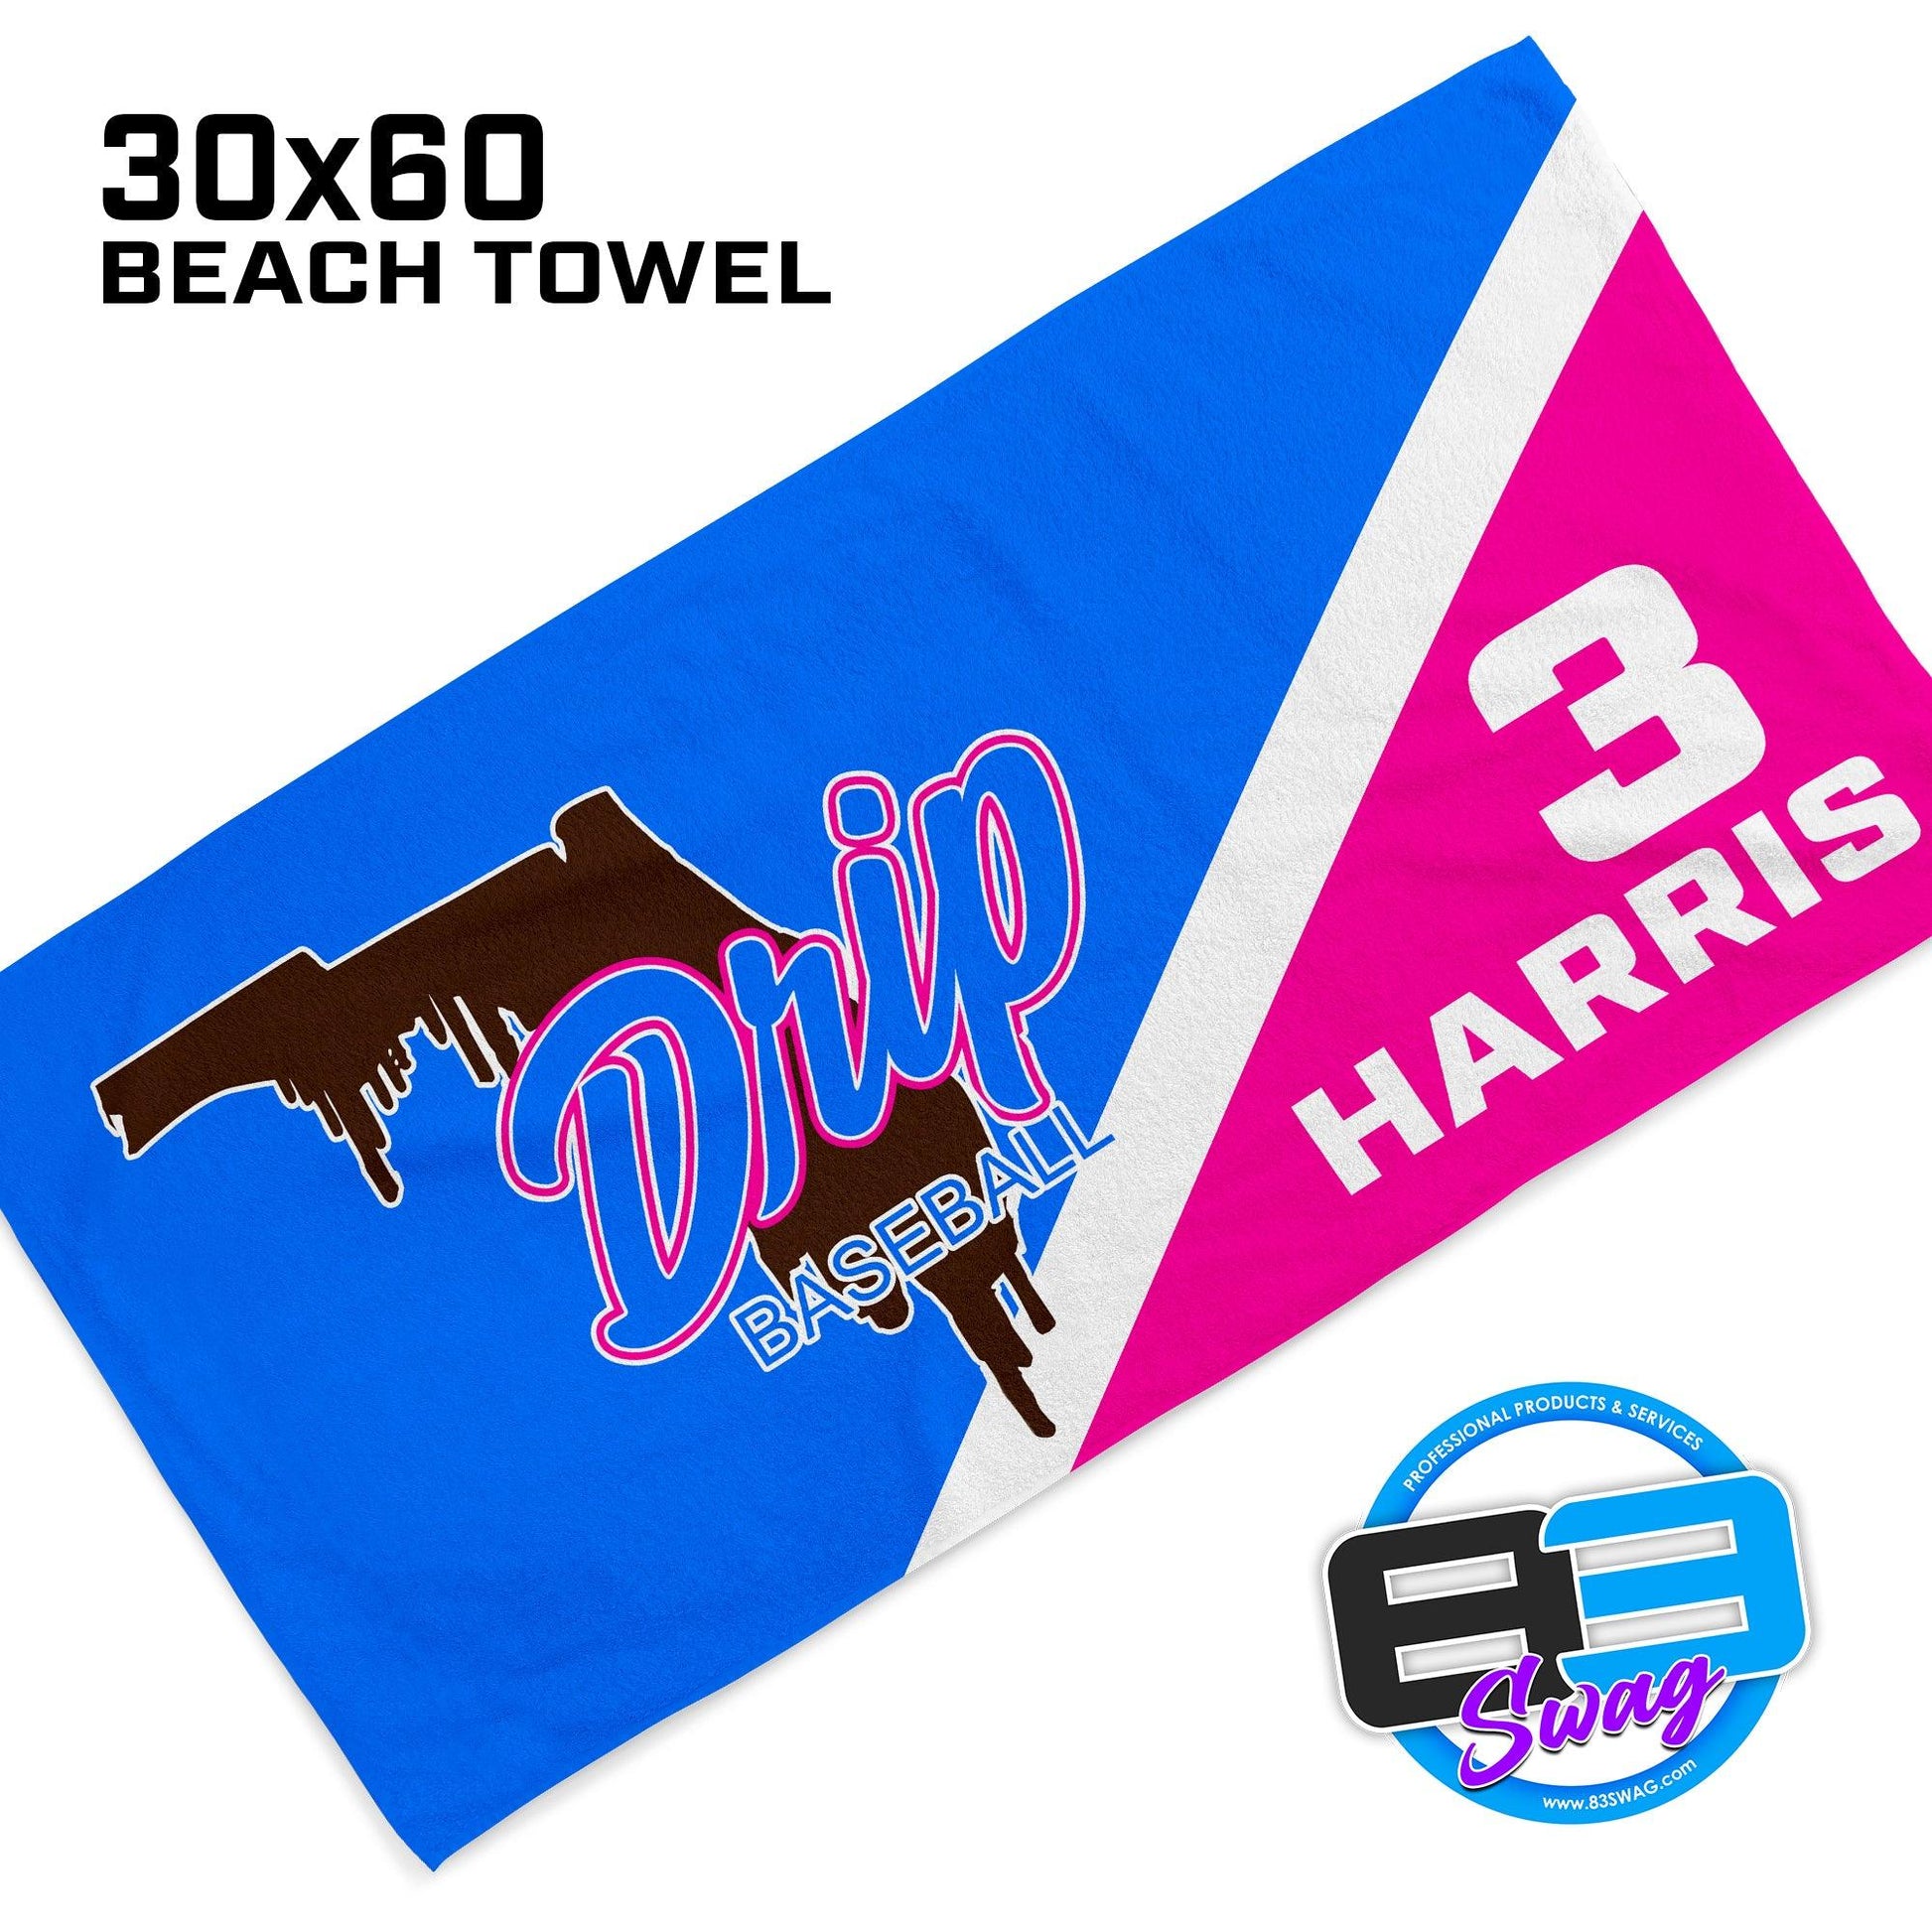 30"x60" Beach Towel - Florida Drip Baseball - 83Swag